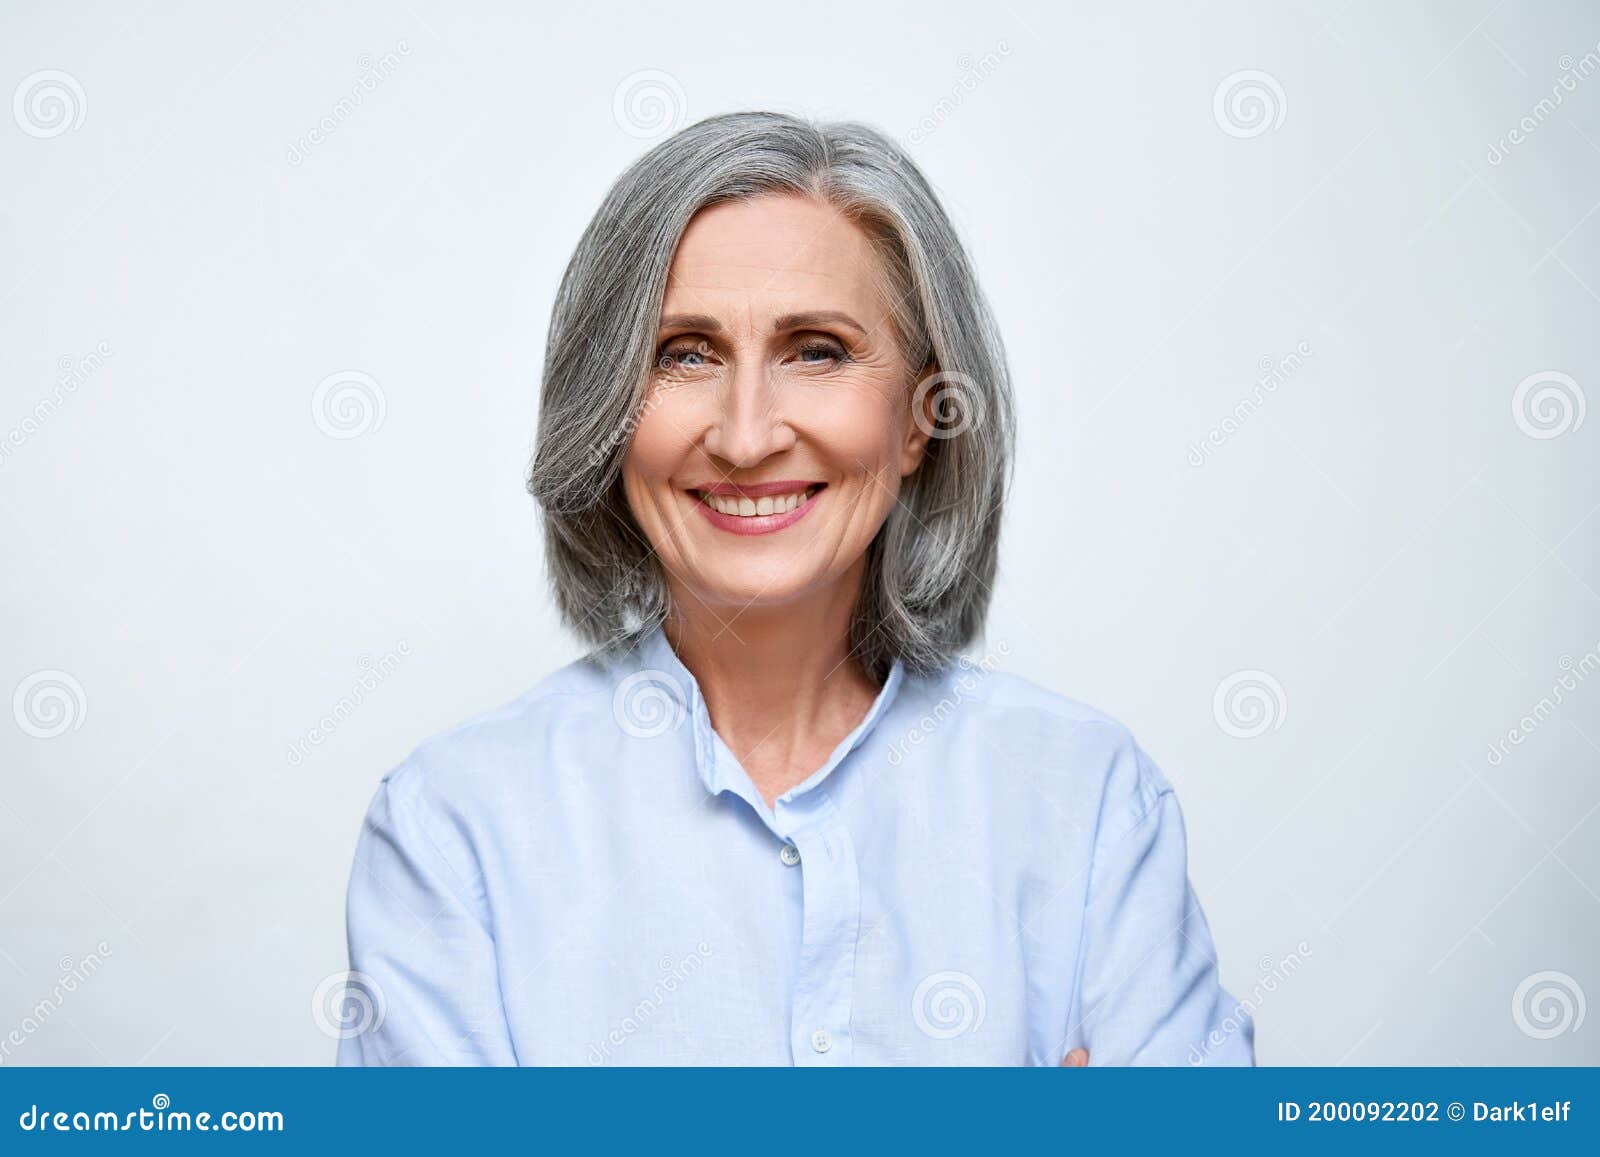 smiling mature business woman  on white background, headshot portrait.